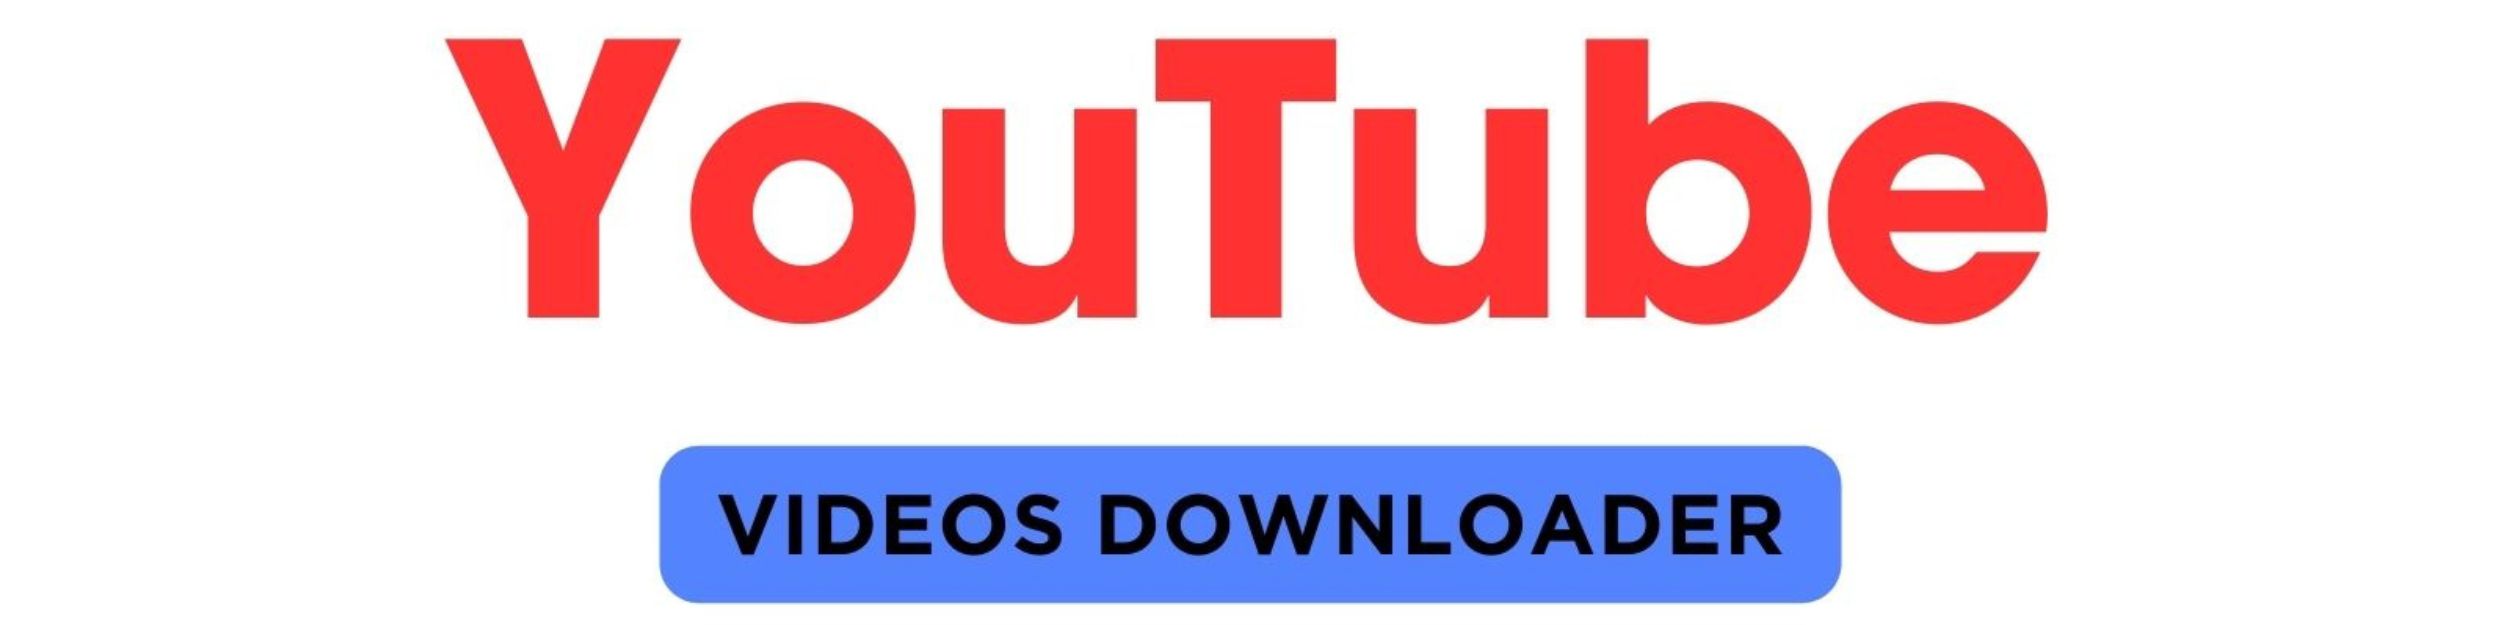 YouTube Videos Downloader logo